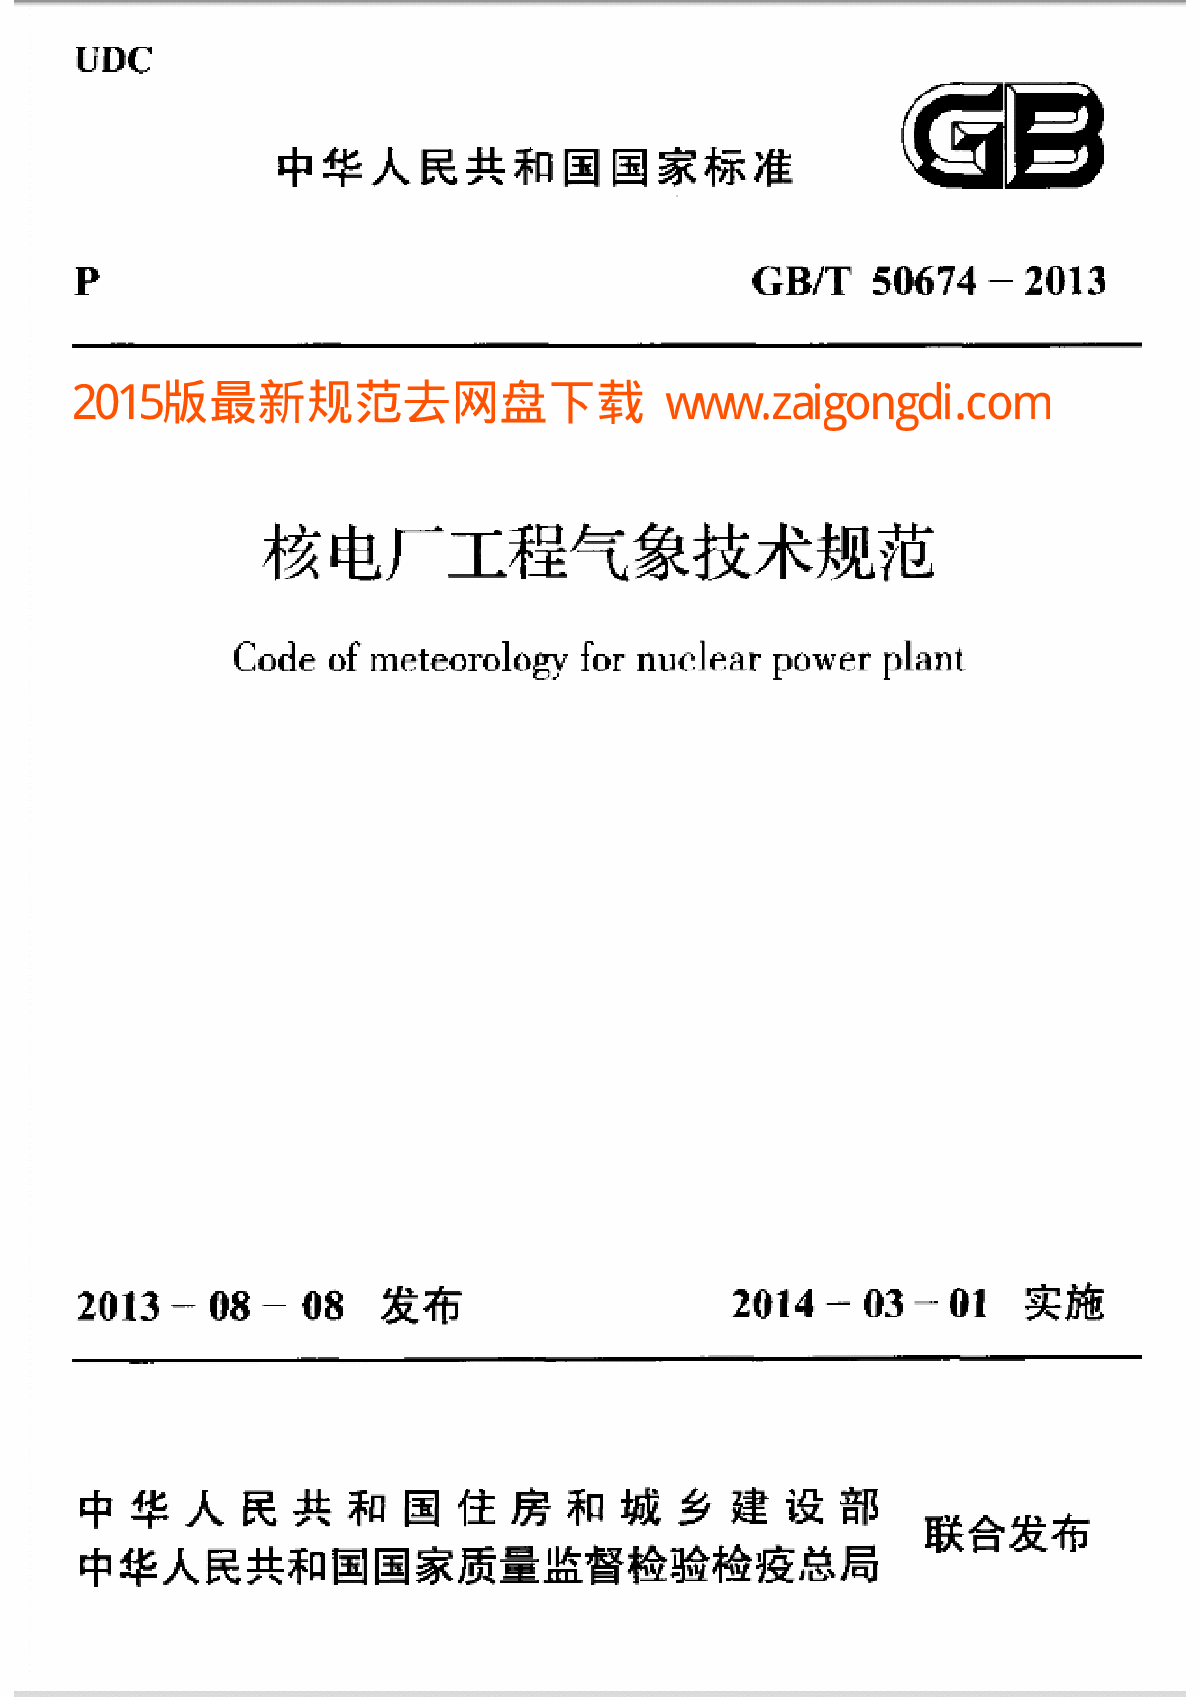 GBT 50674-2013 核电厂工程气象技术规范